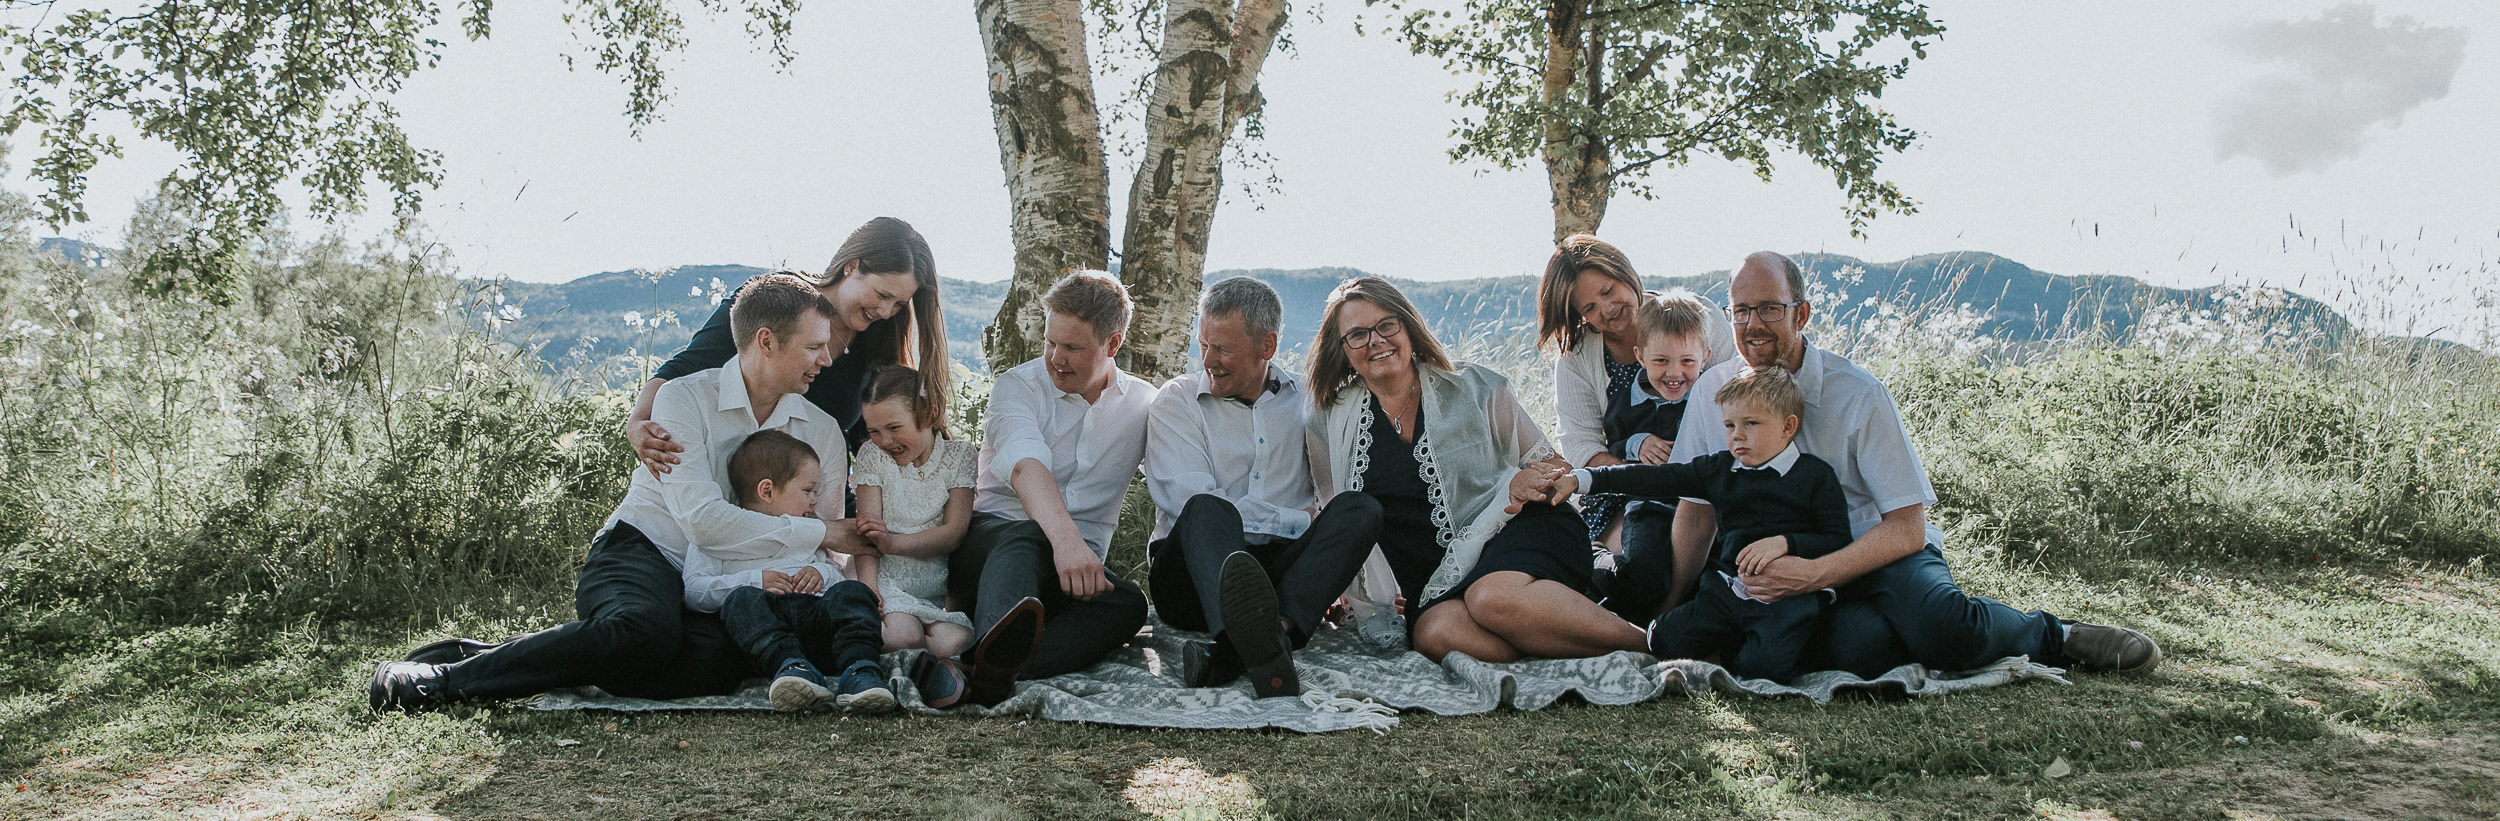 Stor familie nyter varm sommerdag i Alta på fotografering hos TS Foto Design